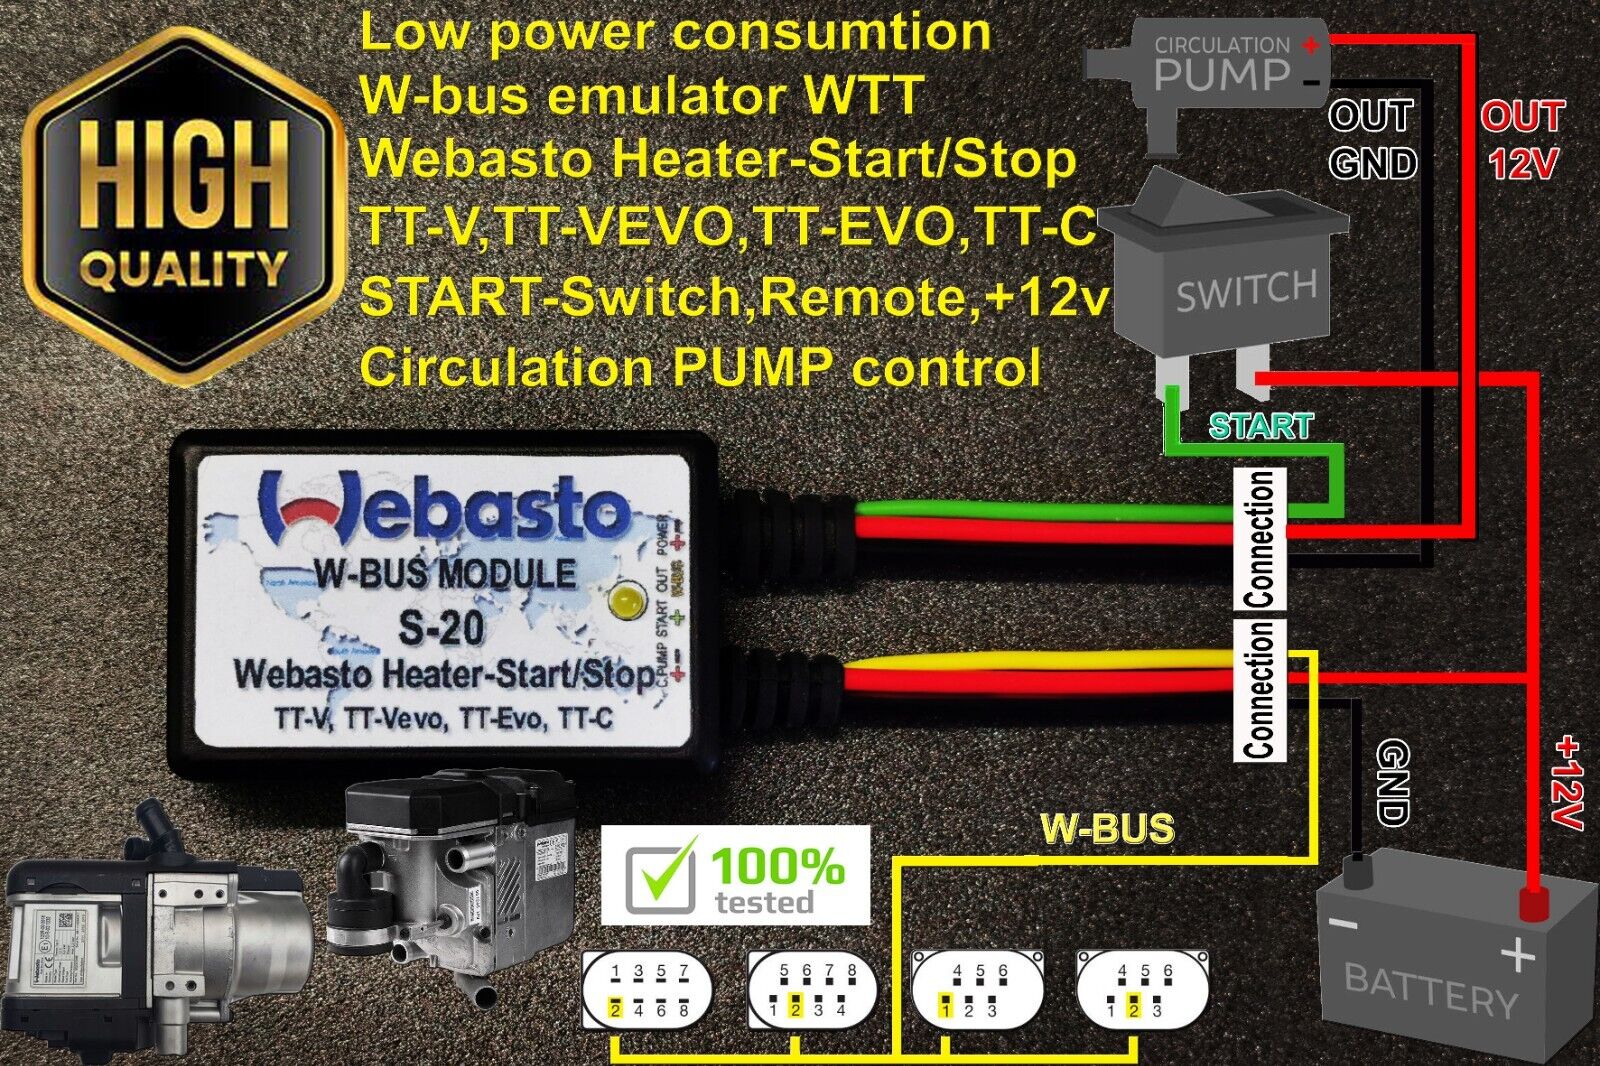 Webasto W-bus module S-20 Autonomous TT-V,TT-VEVO,TT-EVO,TT-C